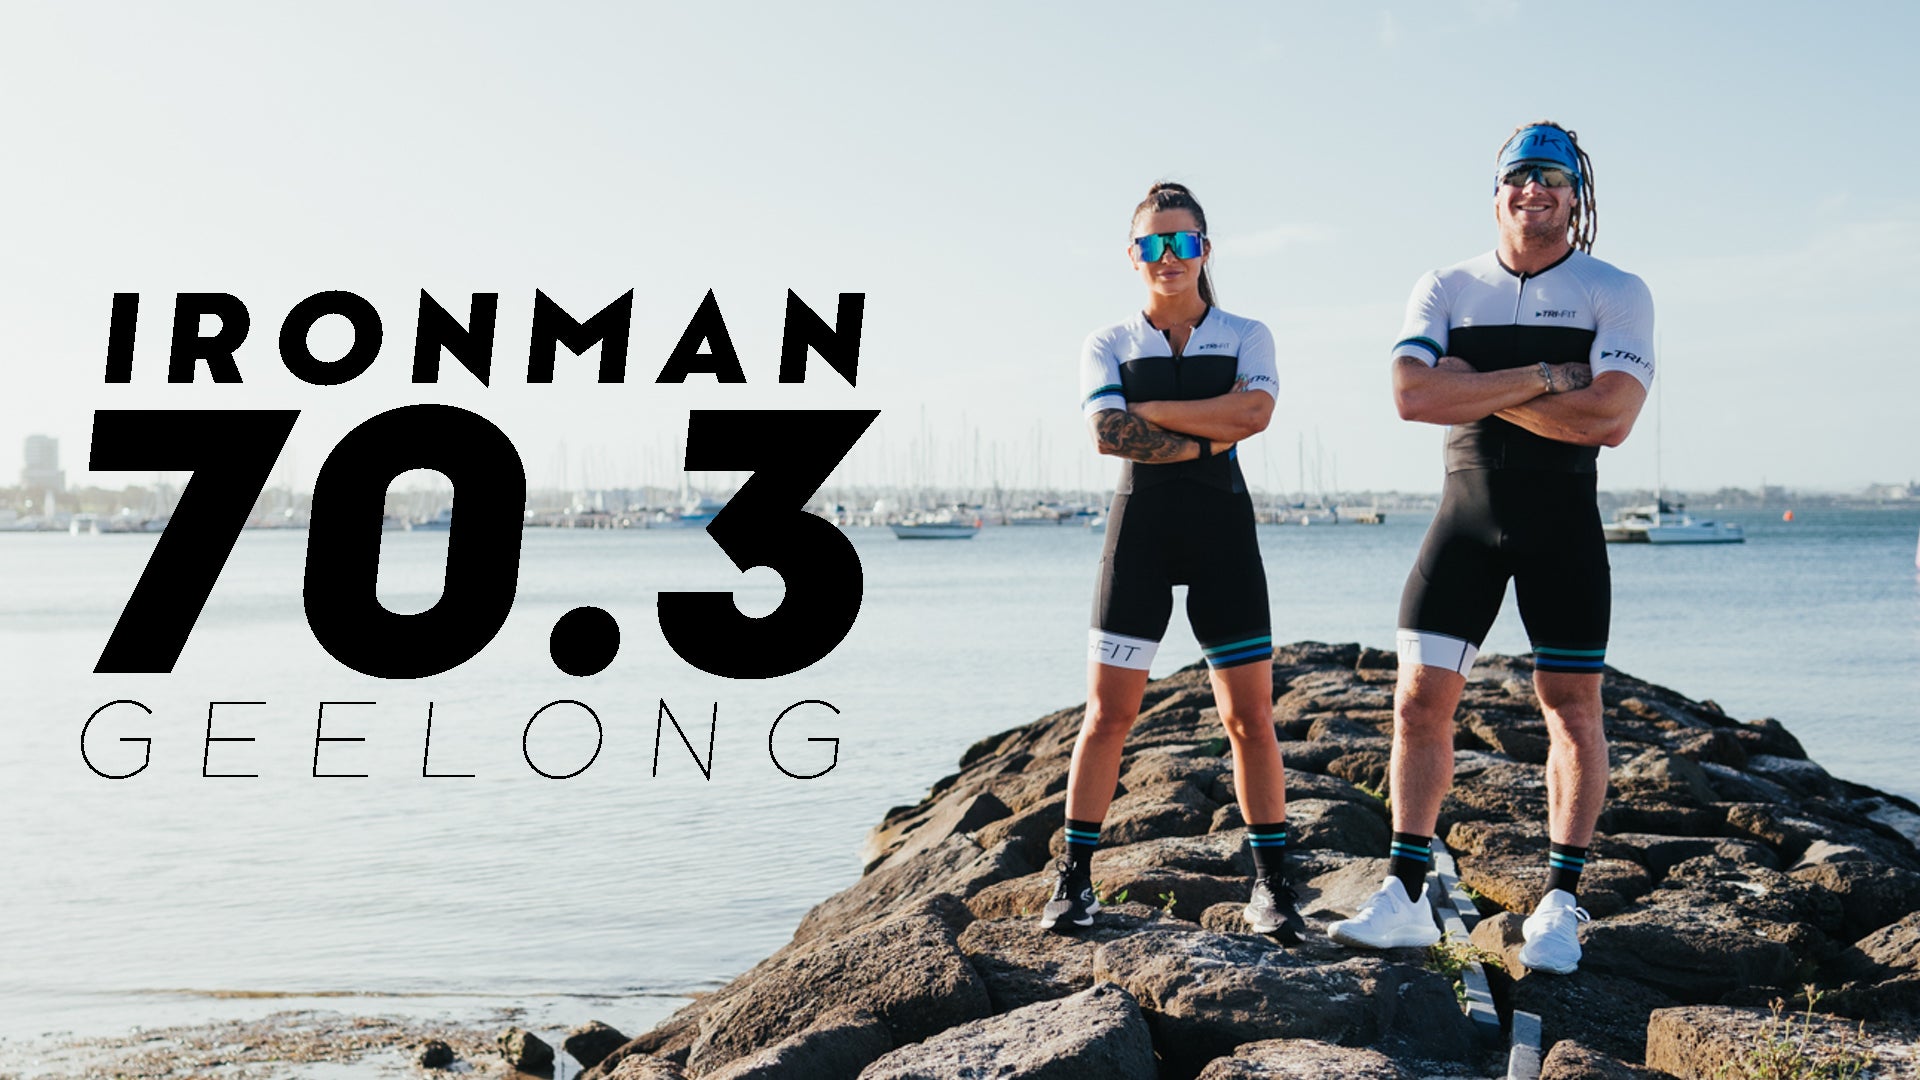 Load video: Geelong 70.3 Ironman